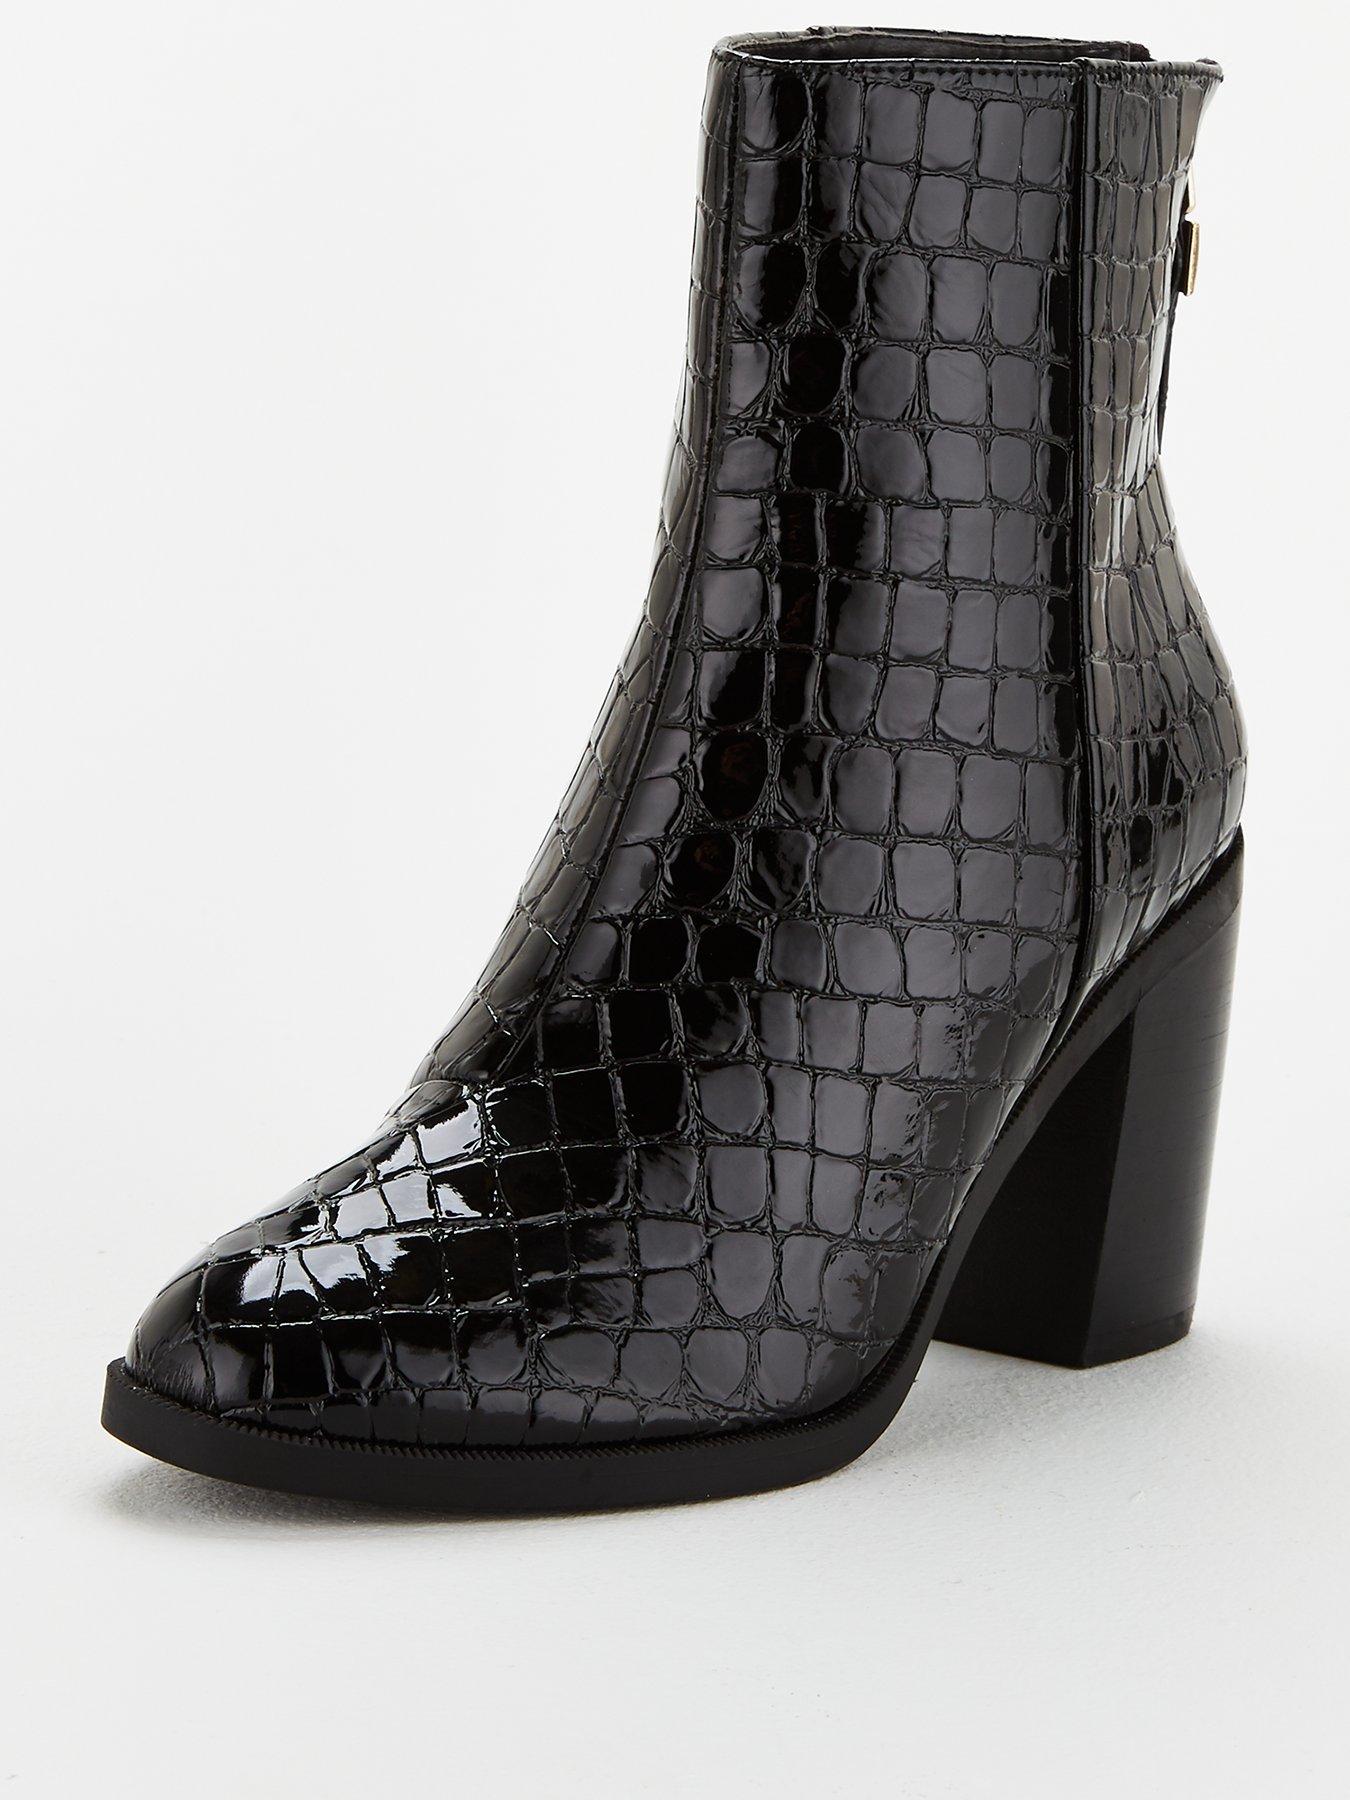 Patent Croc Boot Ankle Boots - Black 